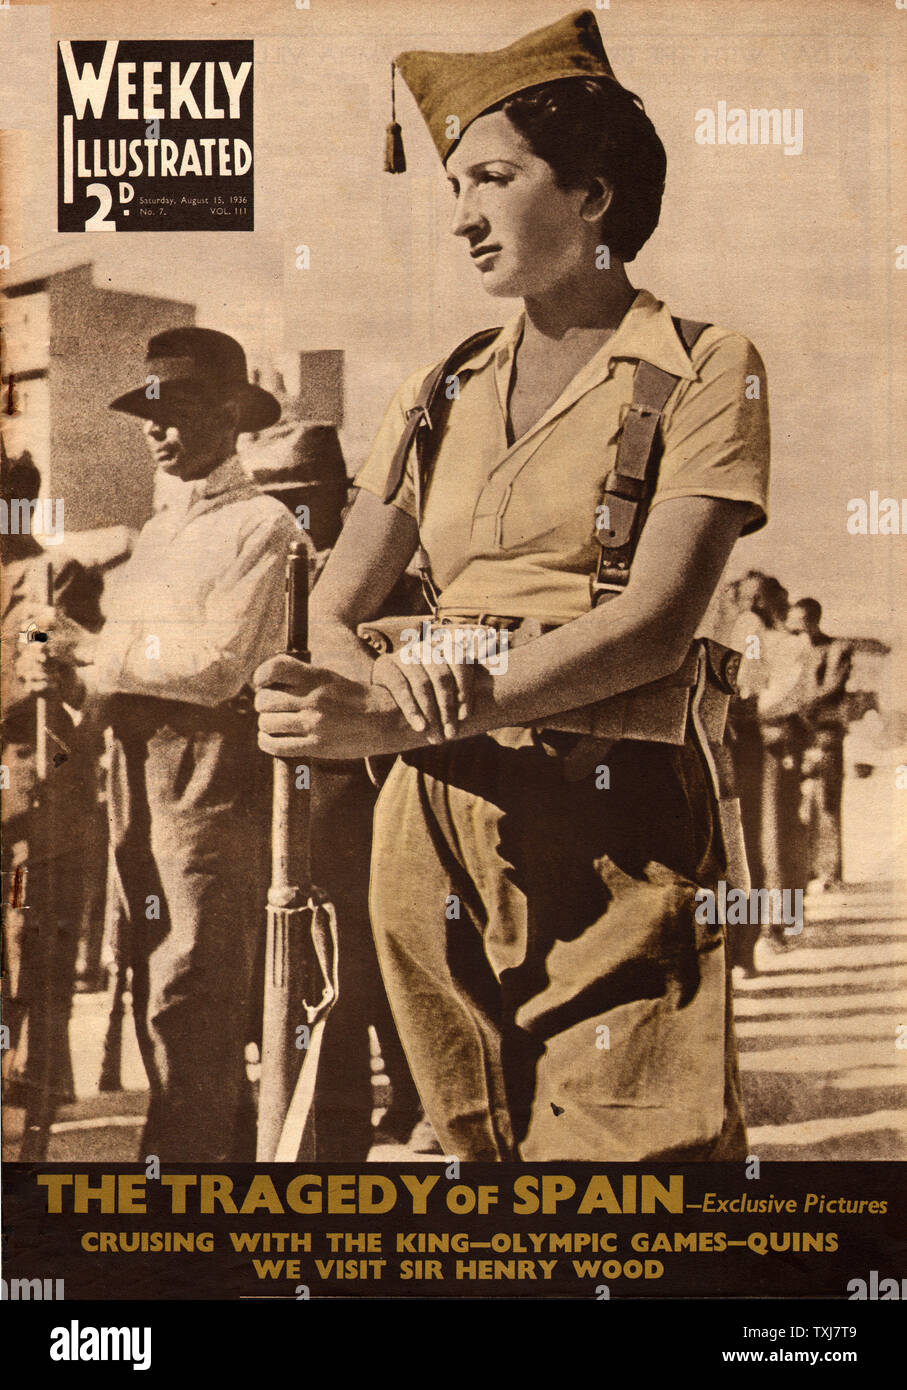 1936 Weekly Illustrated Spanish Civil War Stock Photo